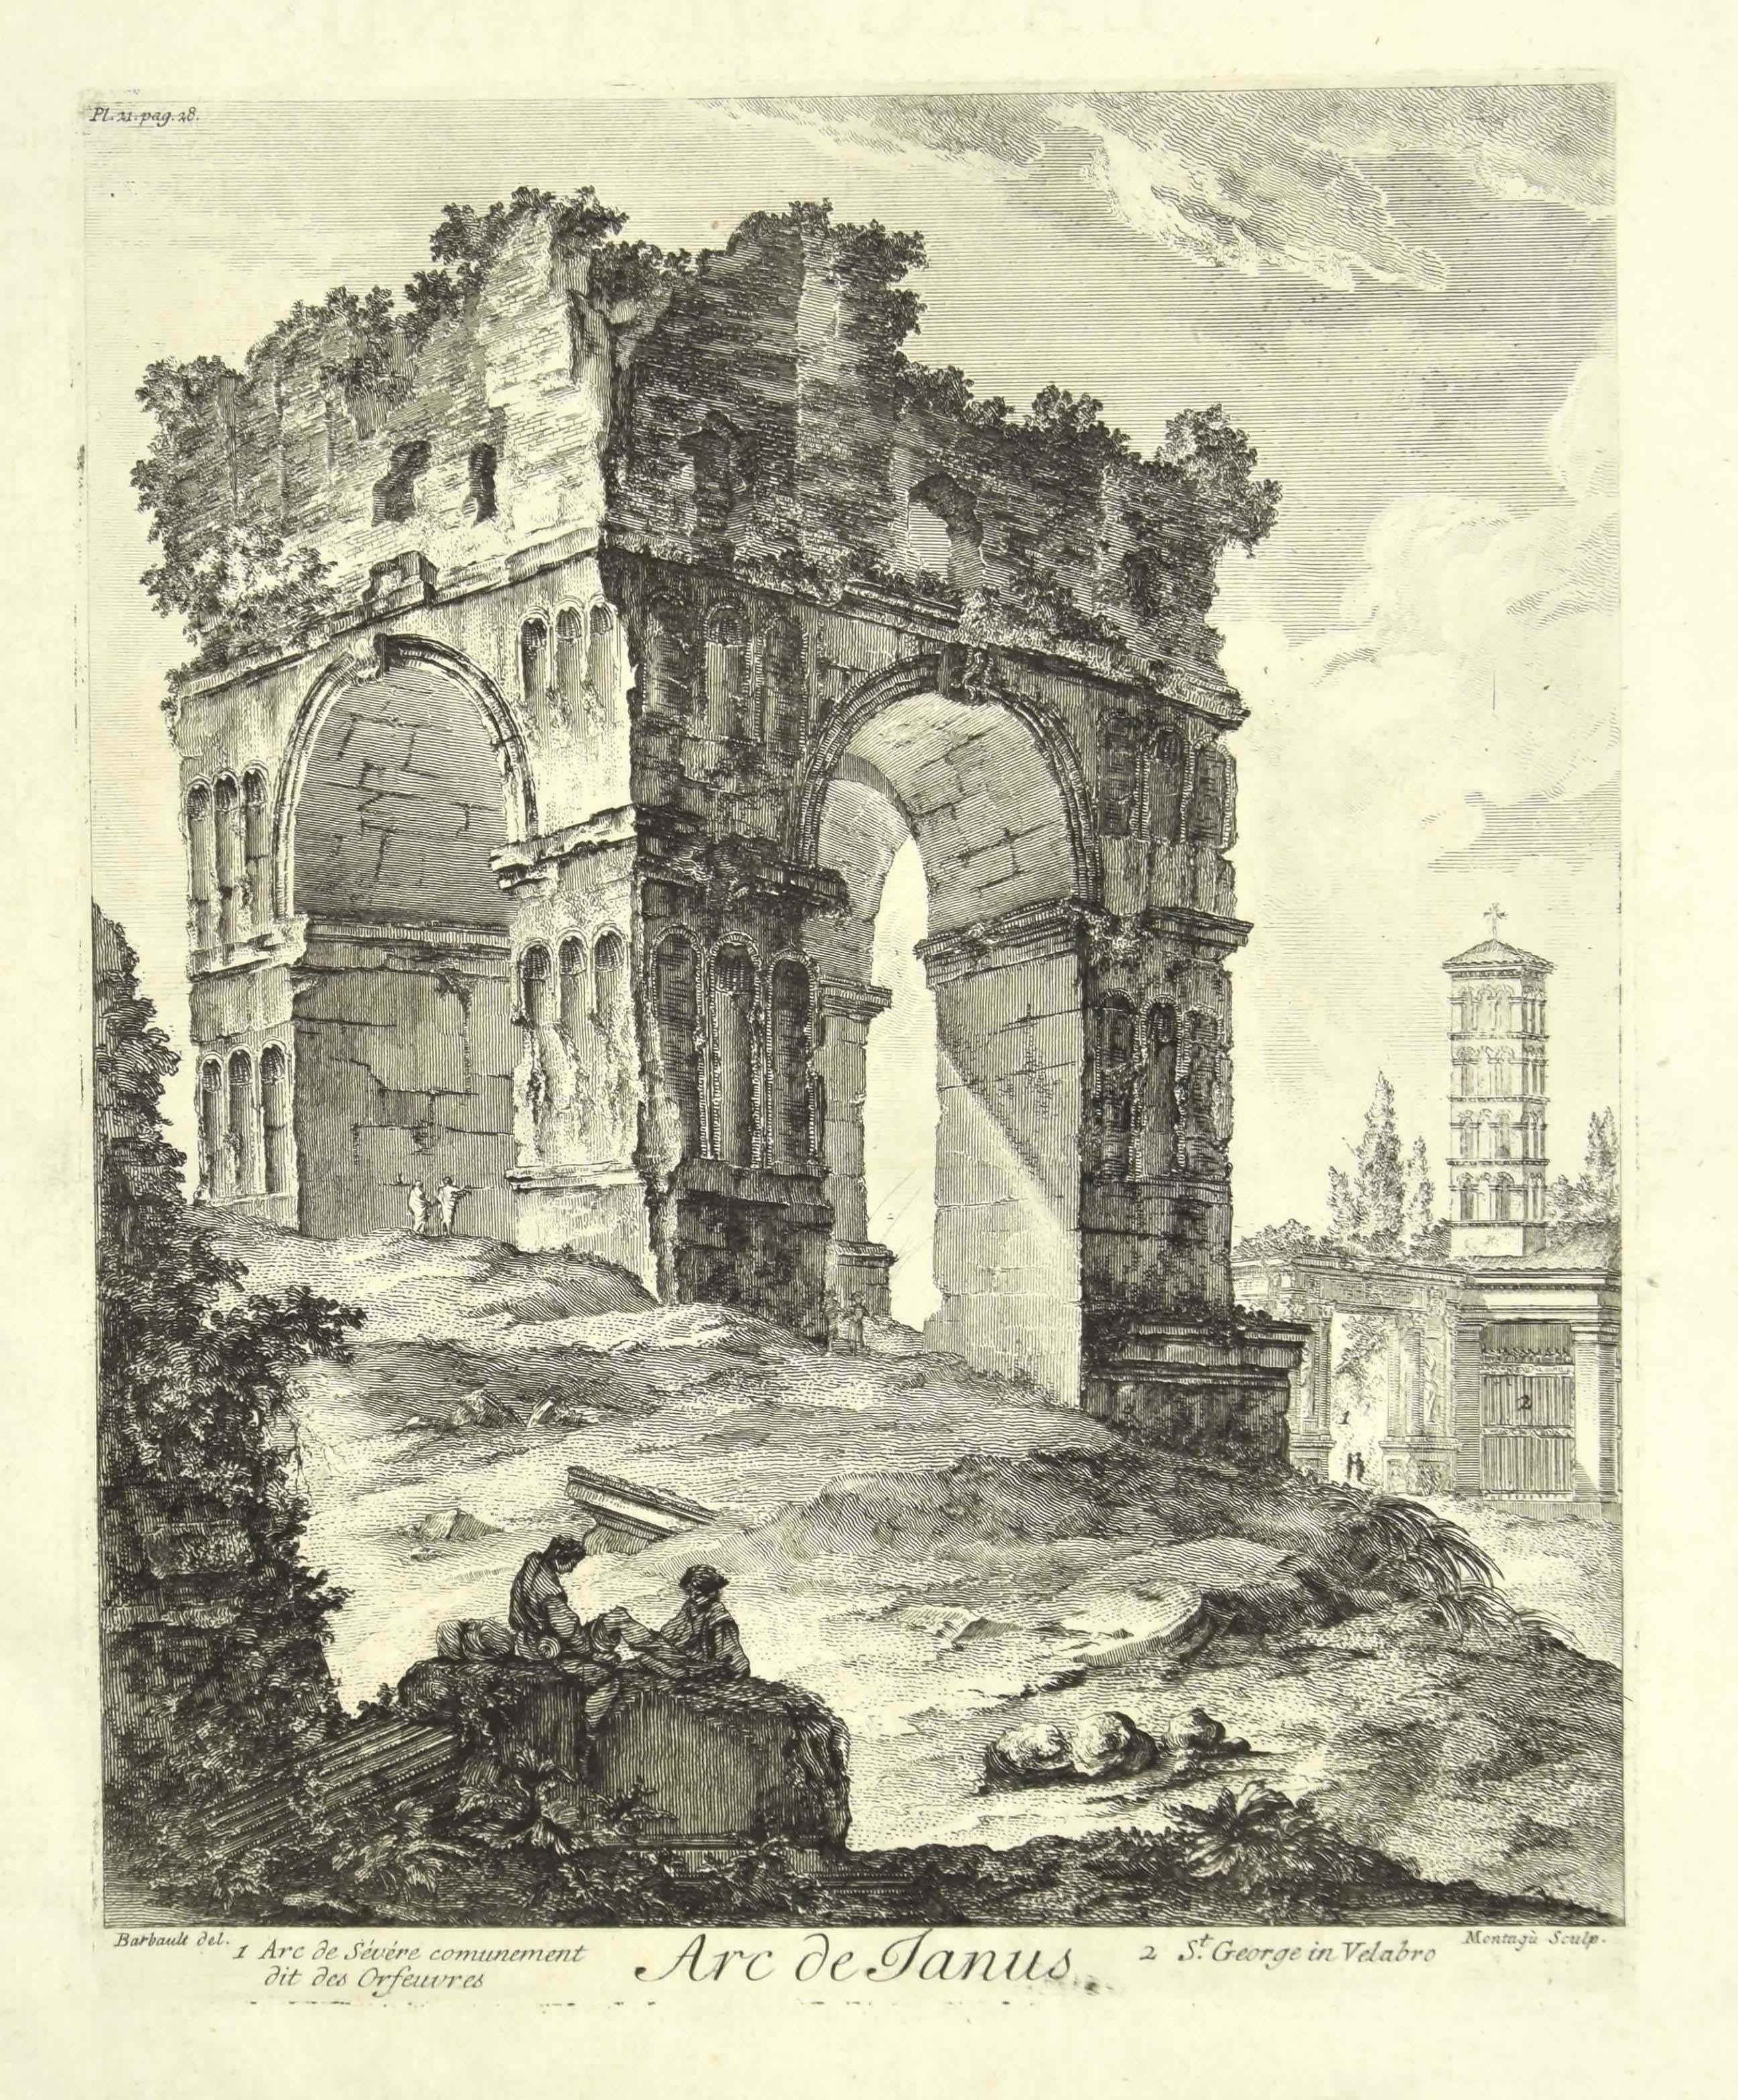 Dominique Montagù Figurative Print – Arch of Janus – Radierung aus dem 18. Jahrhundert